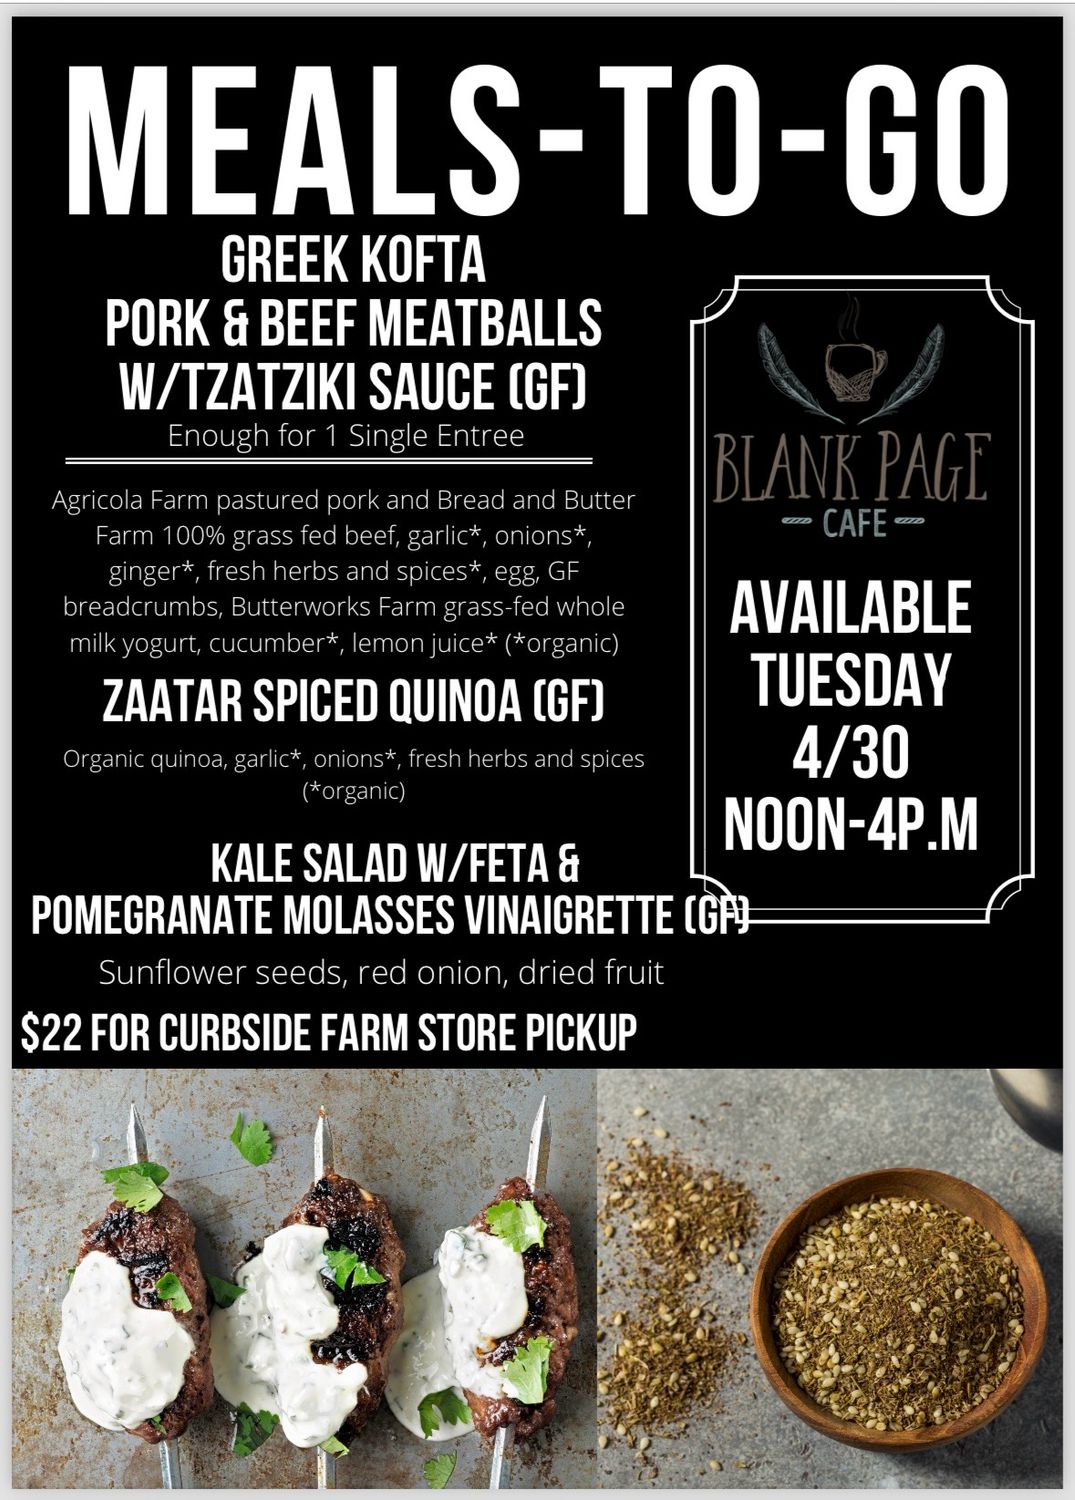 Tuesday 4/30 NOON-4PM PICKUP - Greek Kofta Beef & Pork Meatballs W/Tzatziki Sauce + Zaatar Spiced Quinoa + Kale Salad W/Feta & Pomegranate Molasses Vinaigrette